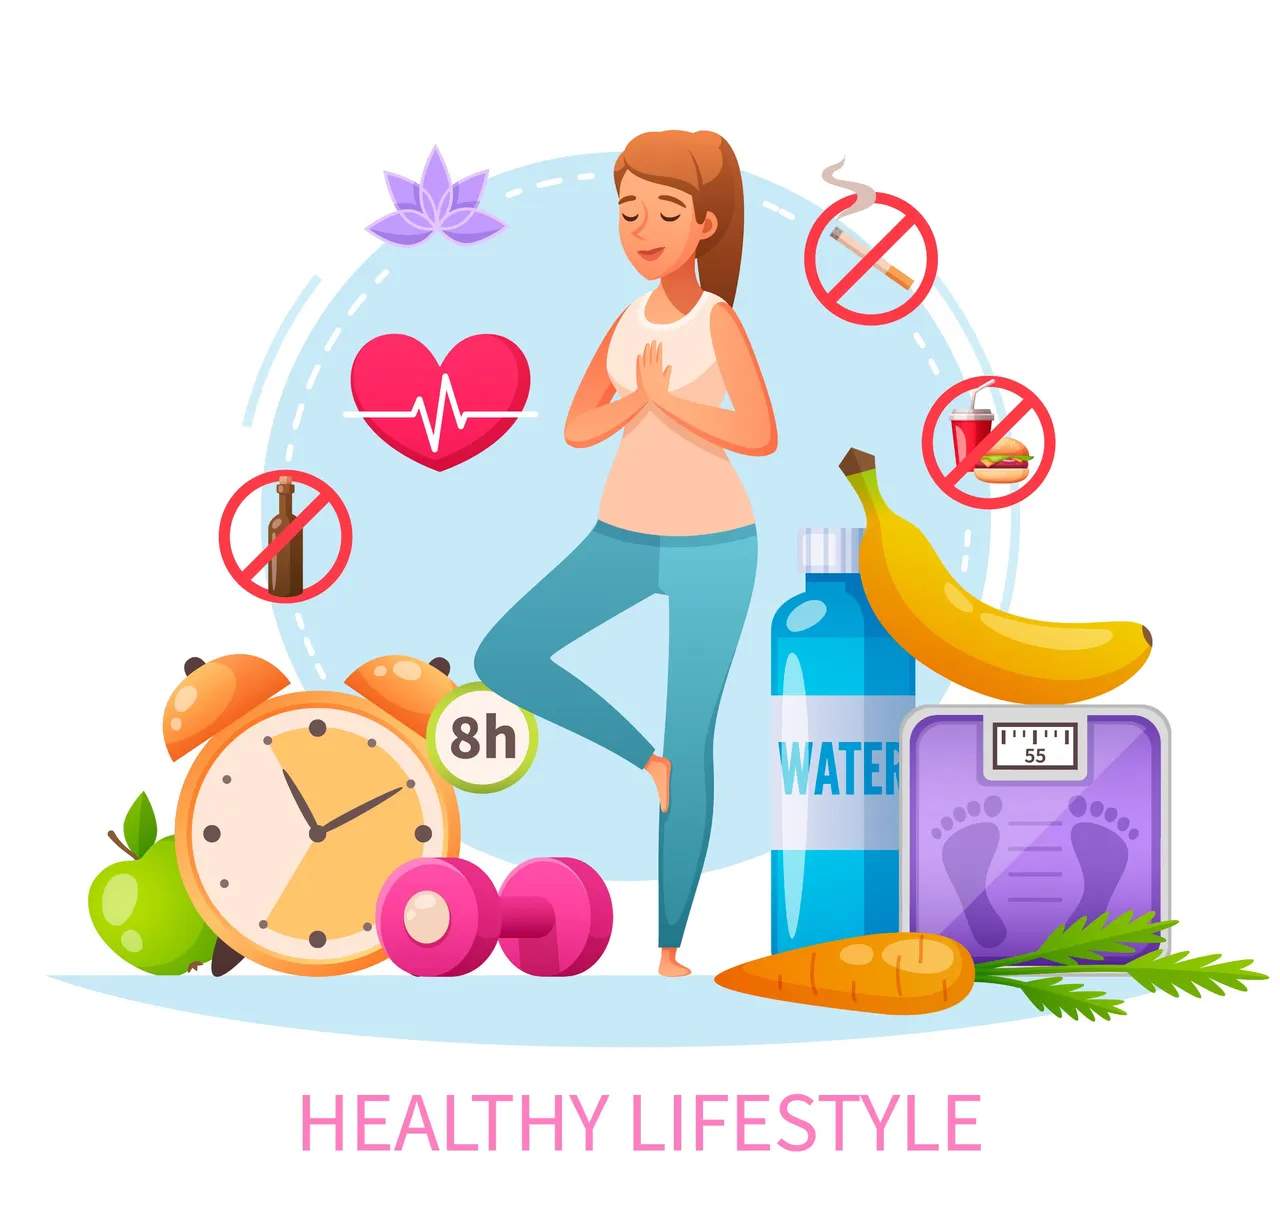 14665907_2002.i203.005_healthy lifestyle cartoon.jpg